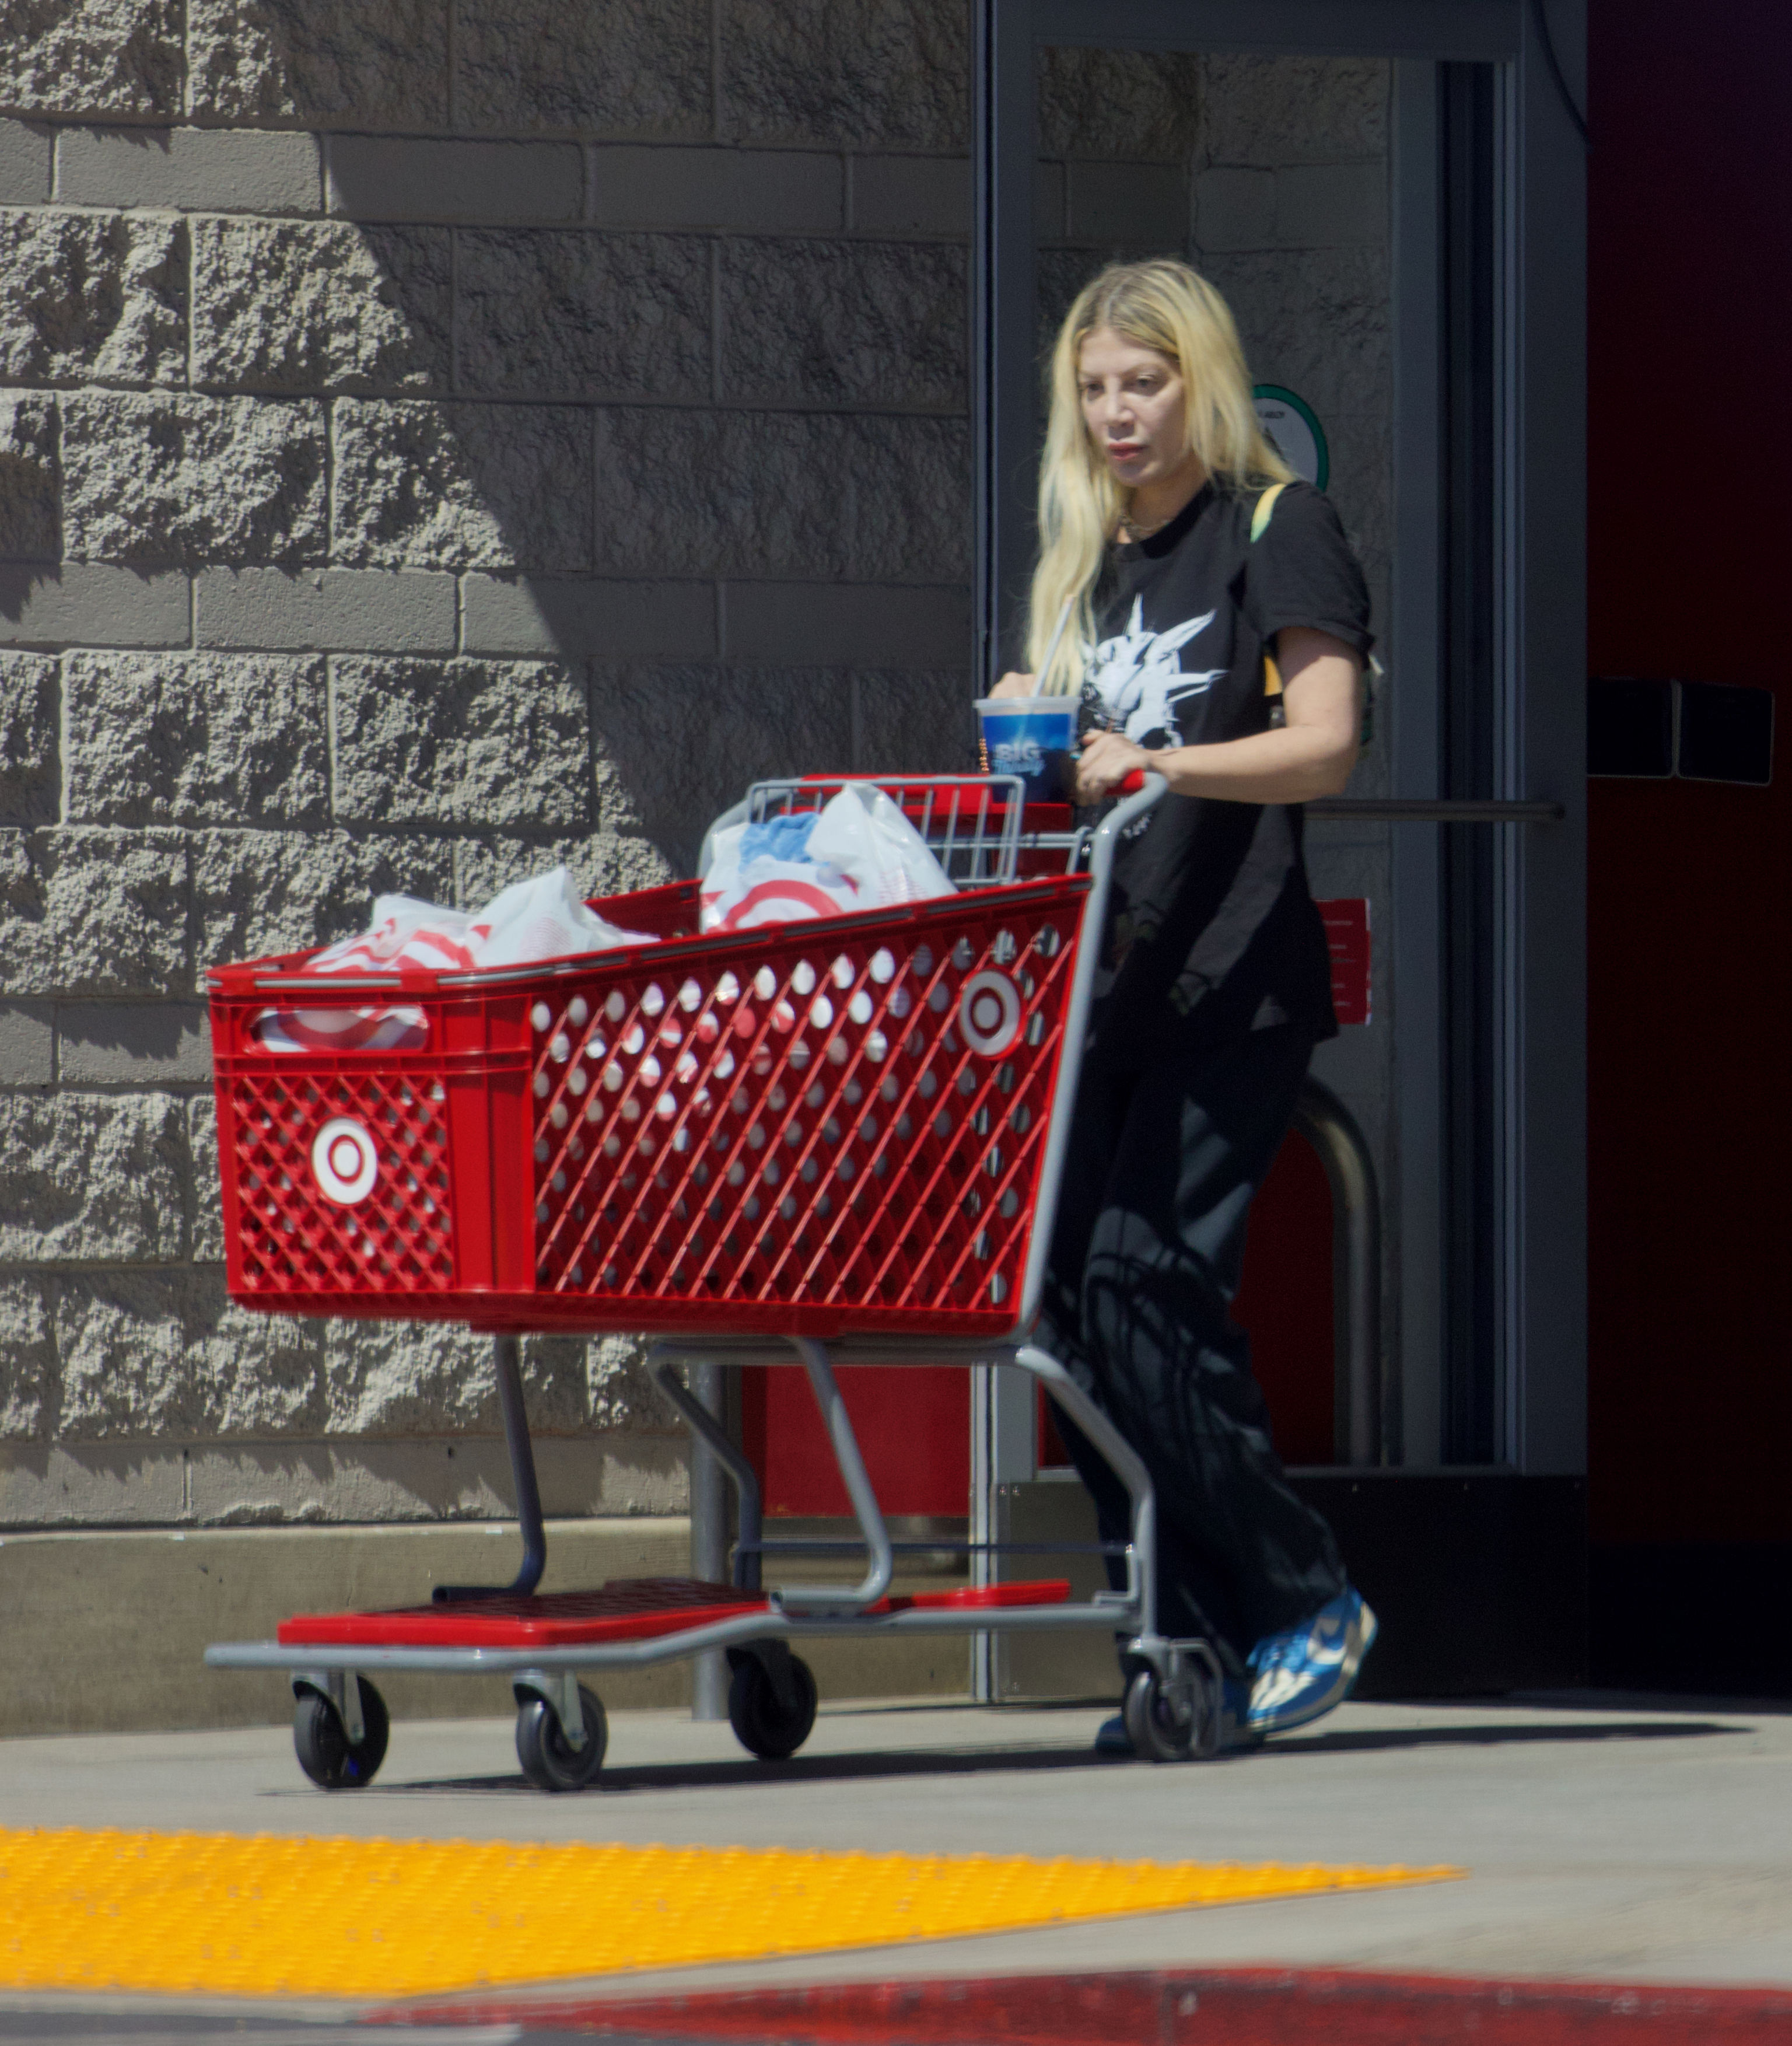 Tori Spelling saliendo de la compra en Target